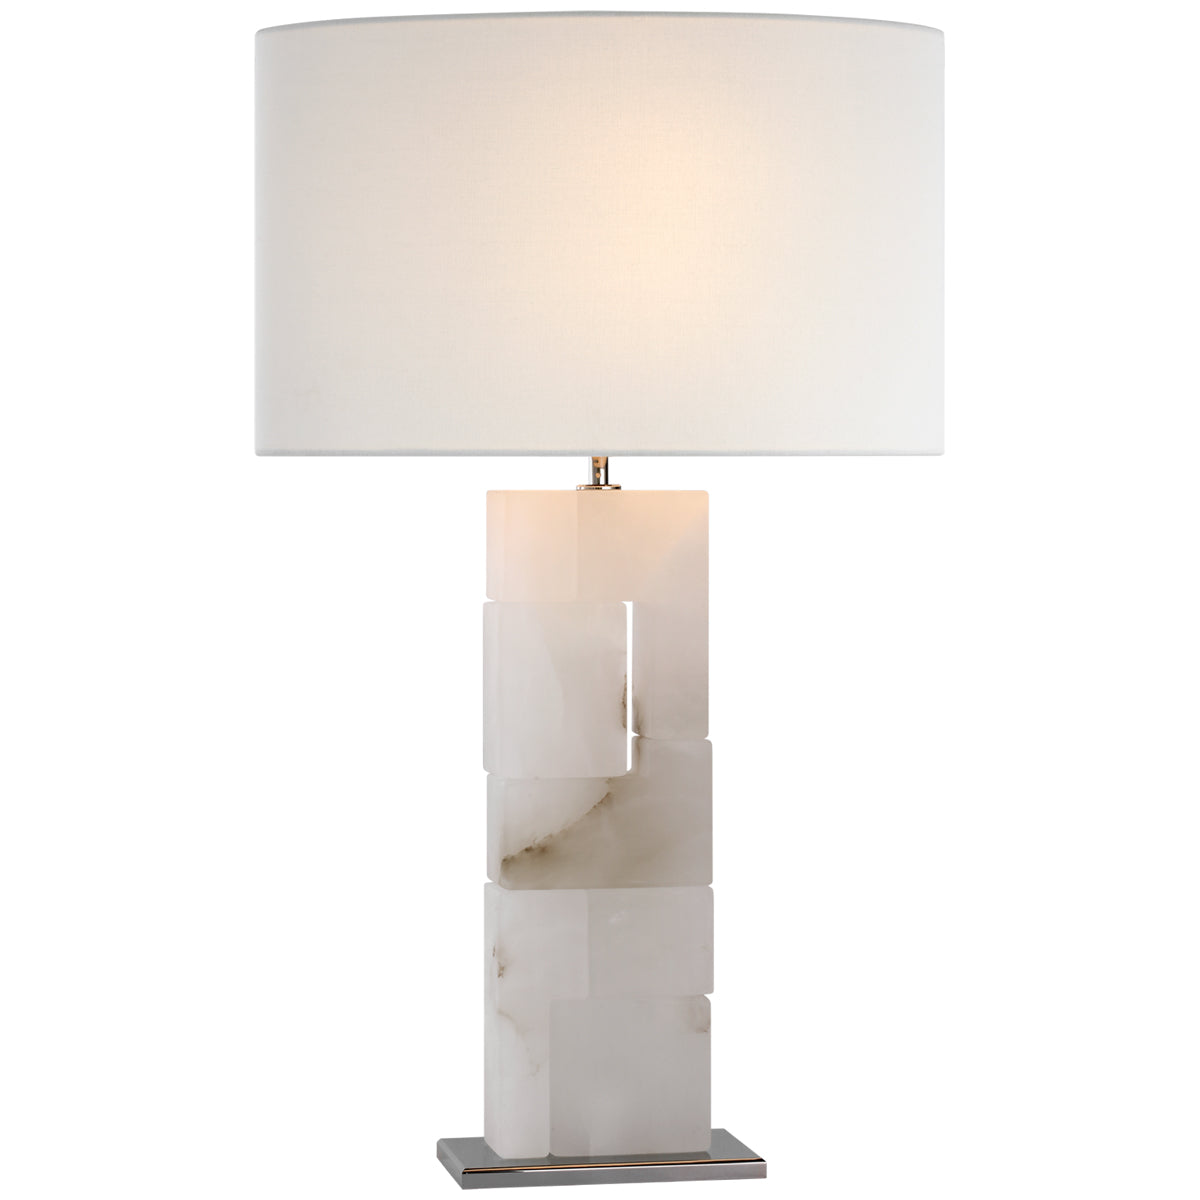 Visual Comfort Ashlar Large Table Lamp